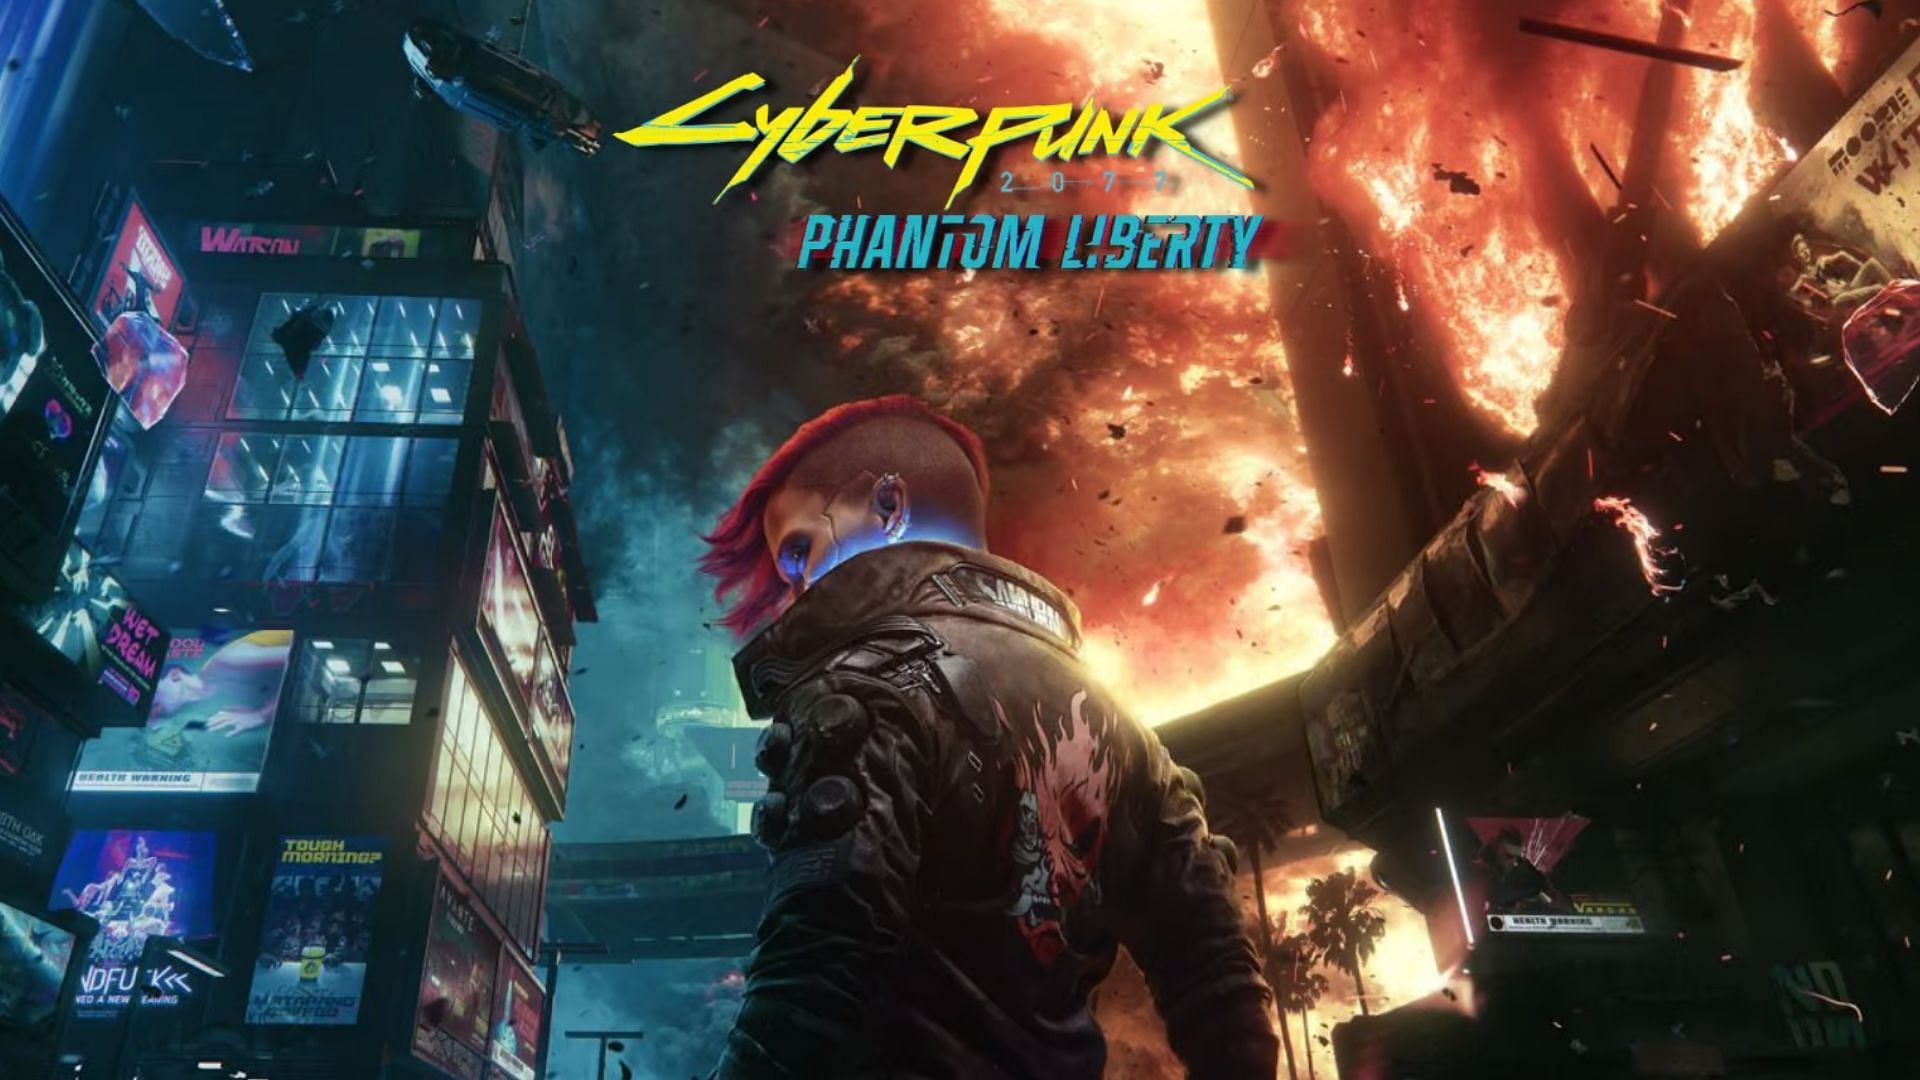 Cyberpunk 2077 Phantom Liberty. [3840x2160] and [1920x1080] : r